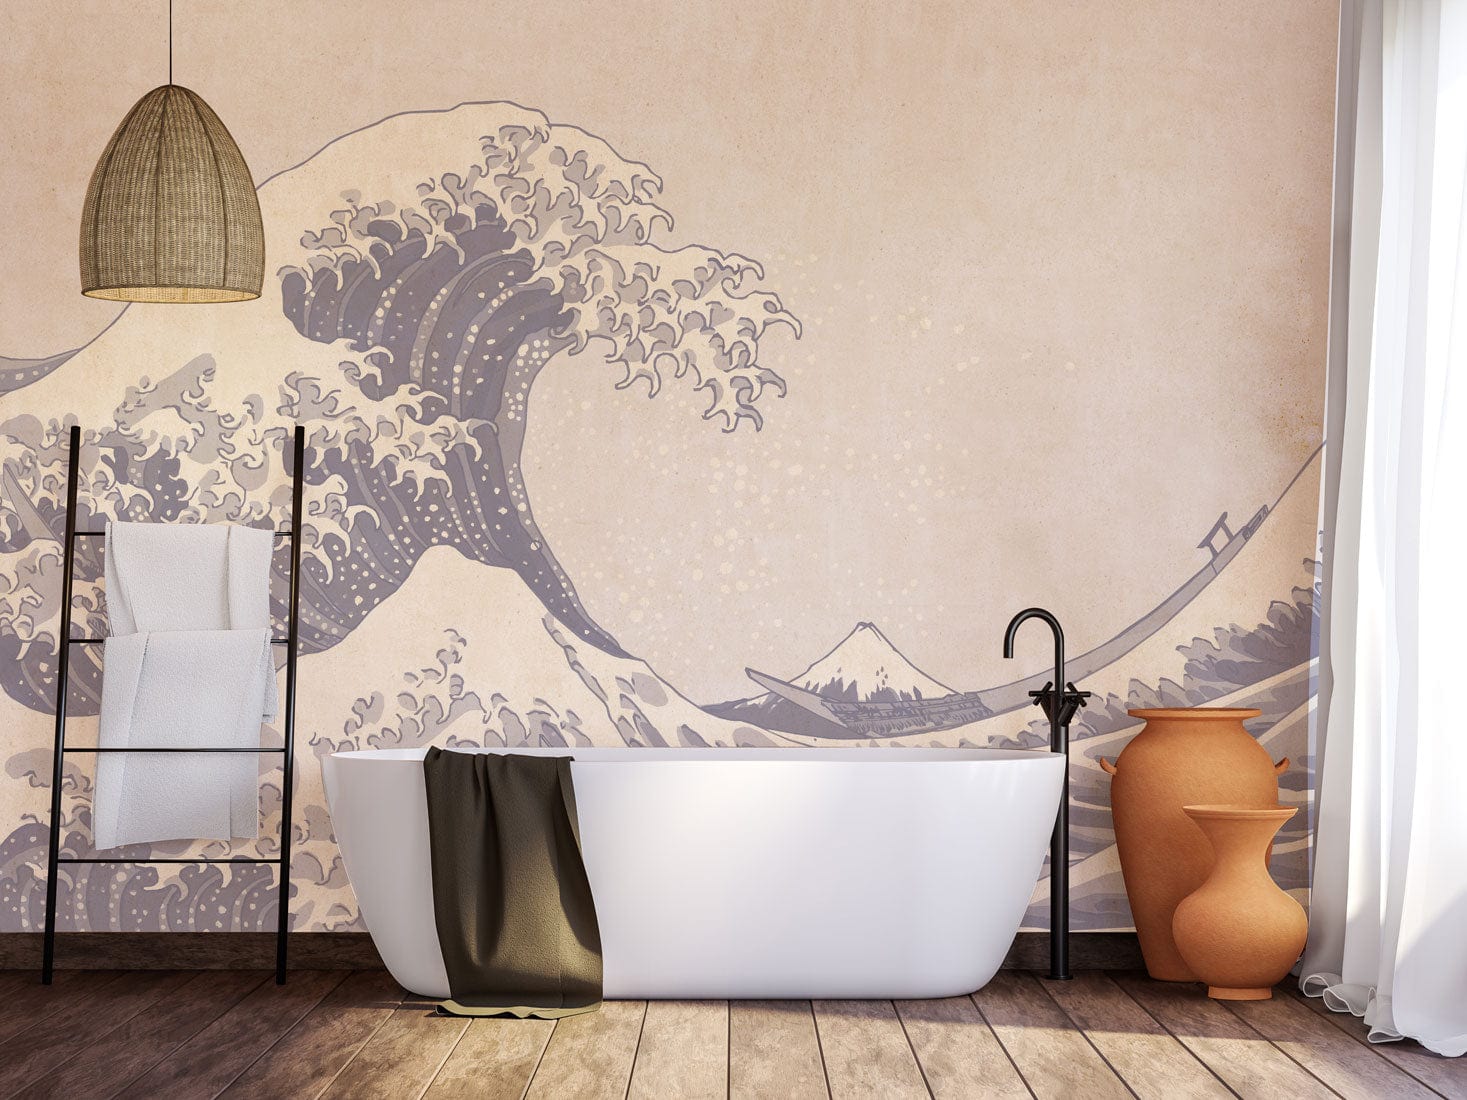 Pastel Blue Waves Wallpaper Mural for bathroom